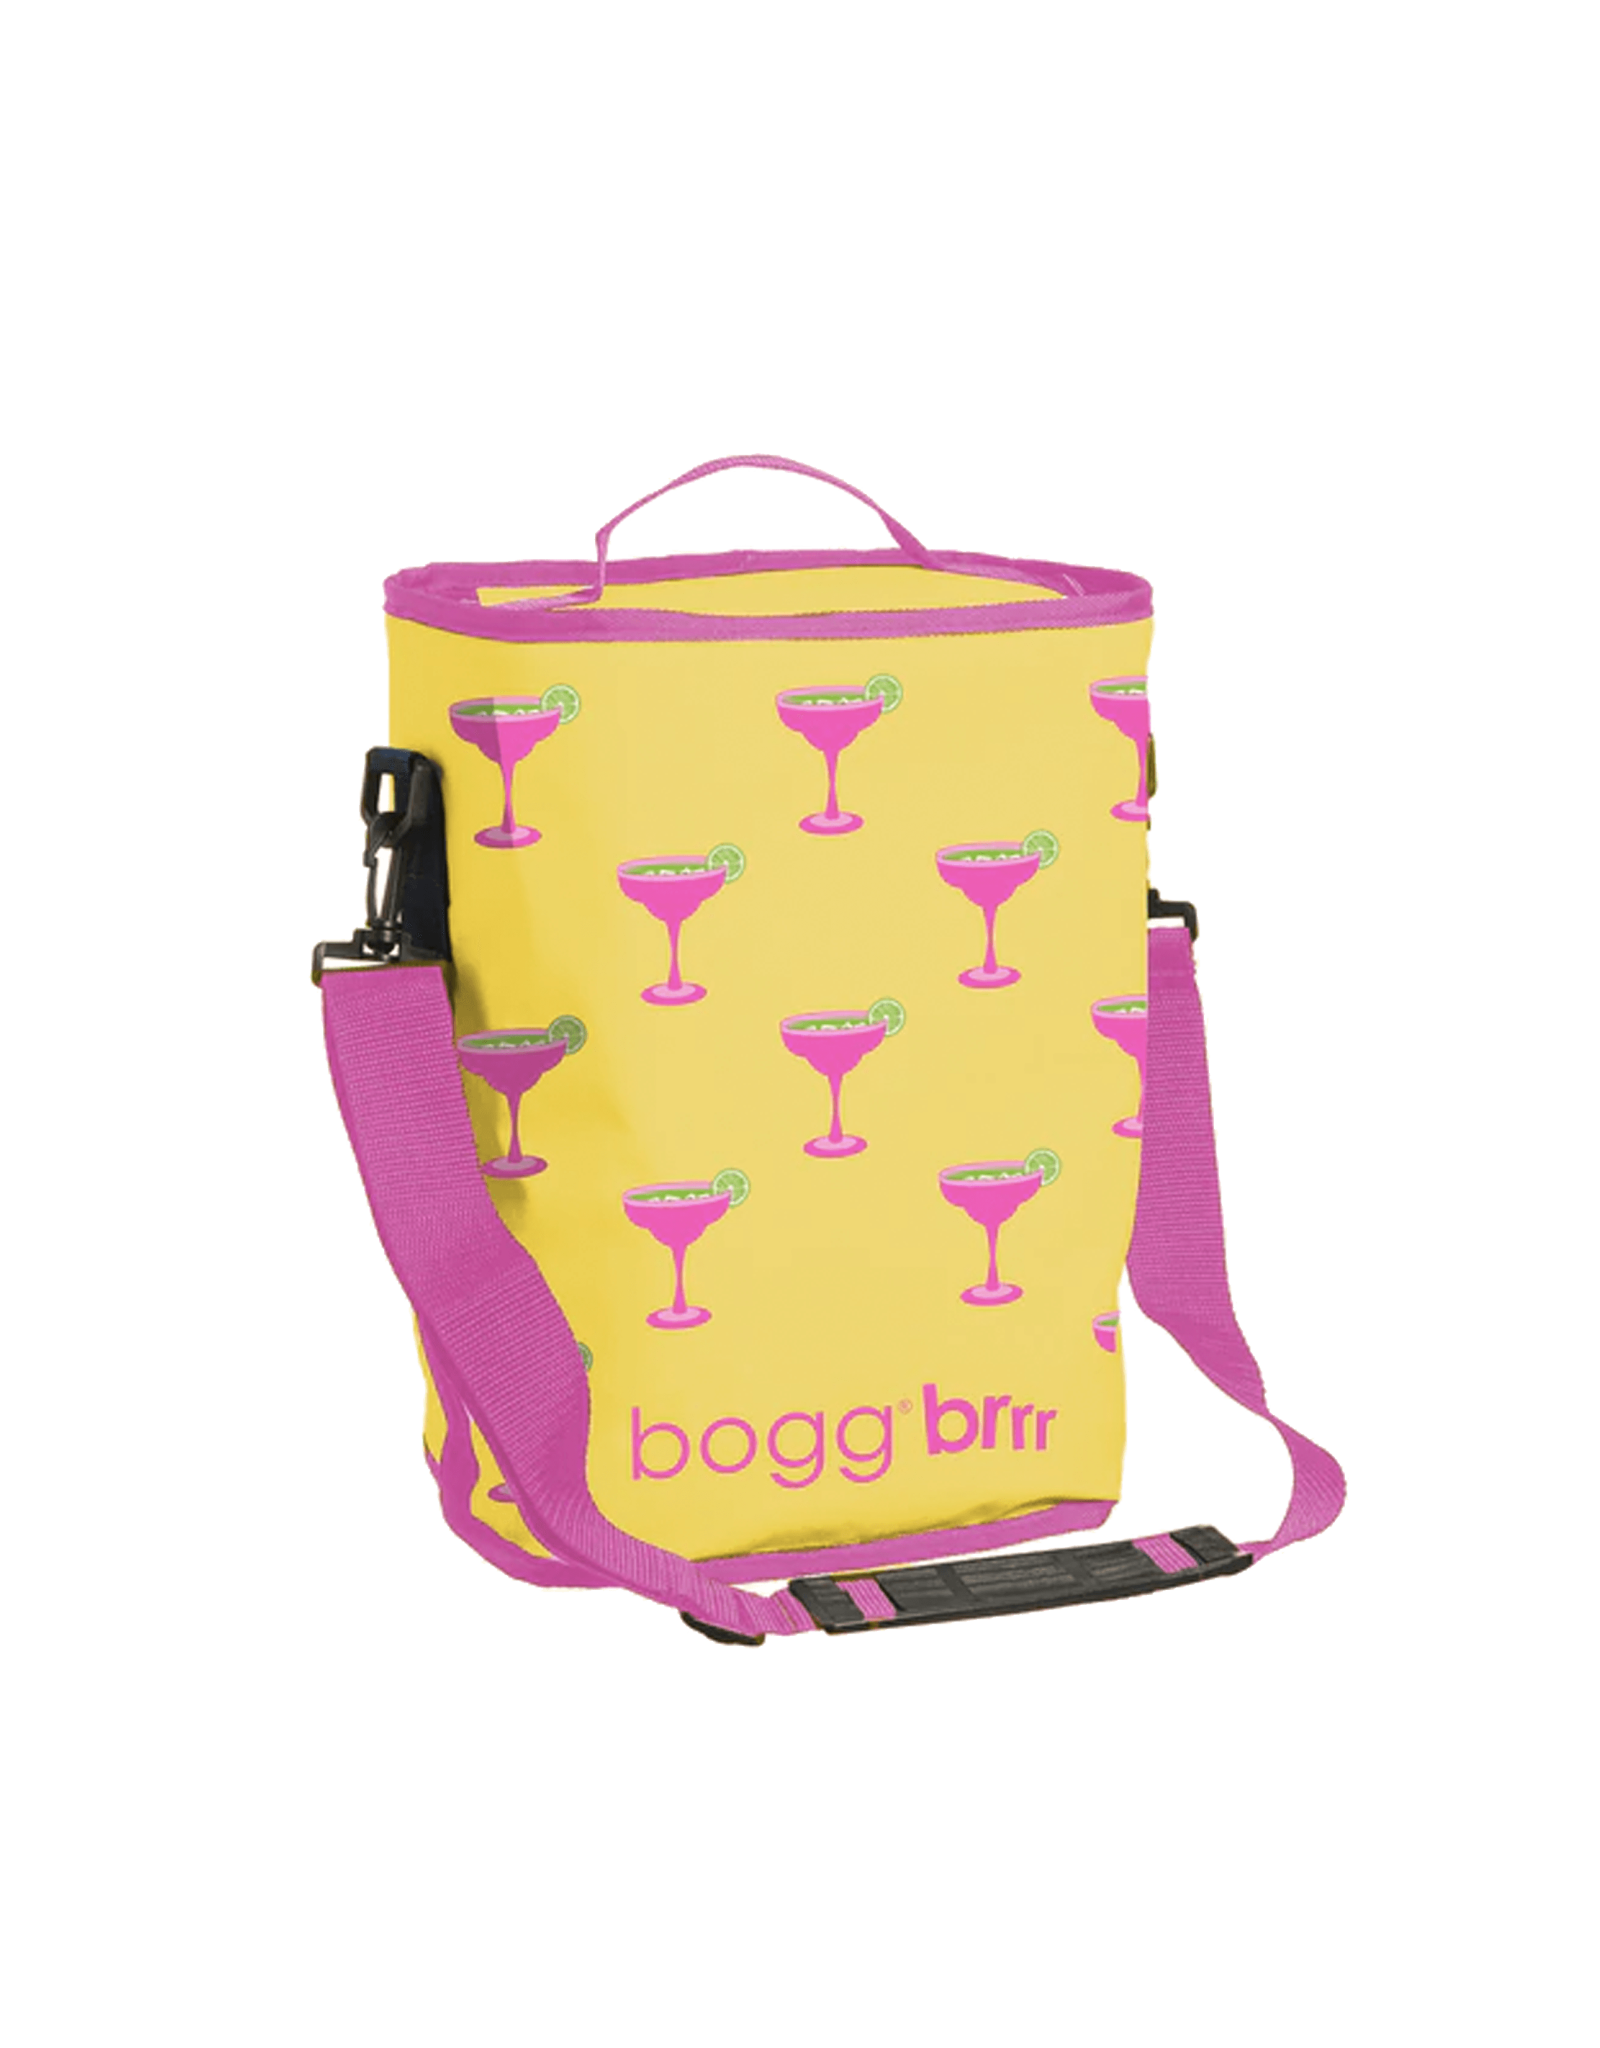 Bogg Bag Half Cooler Insert  - Margarita